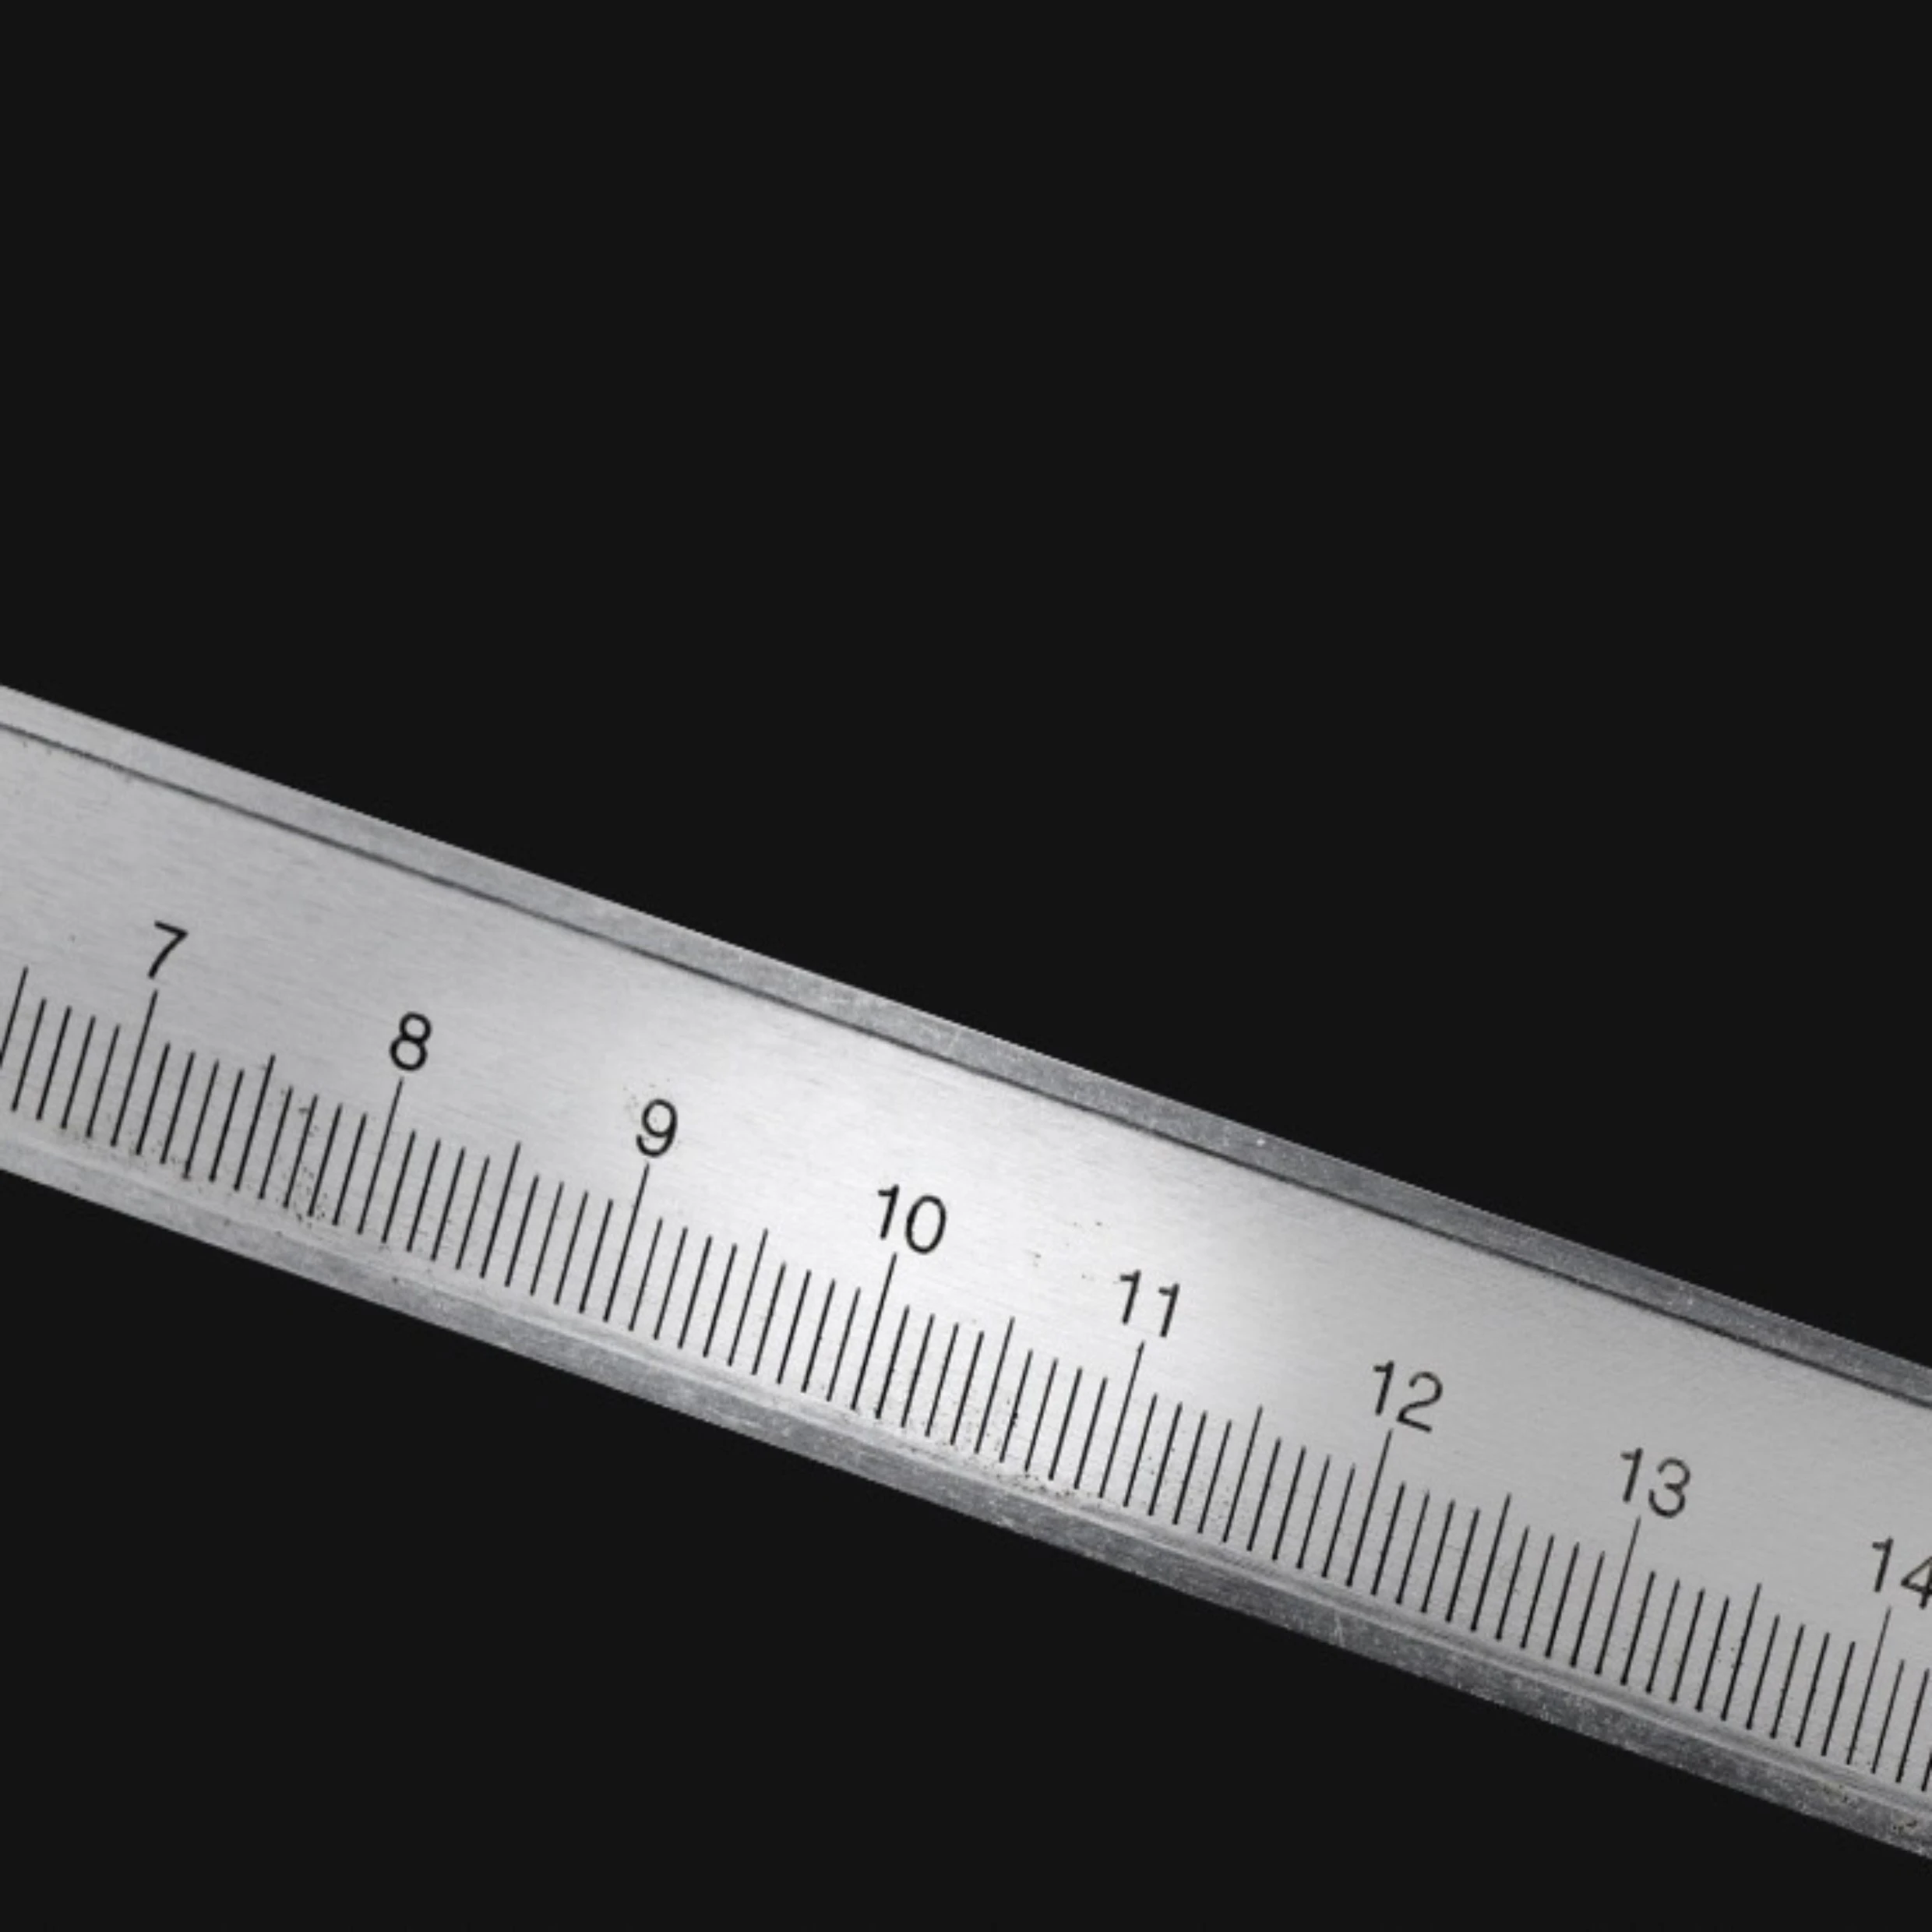 0-150/200mm Hardened Carbon Steel Accuracy Gauge Micrometer Vernier Caliper